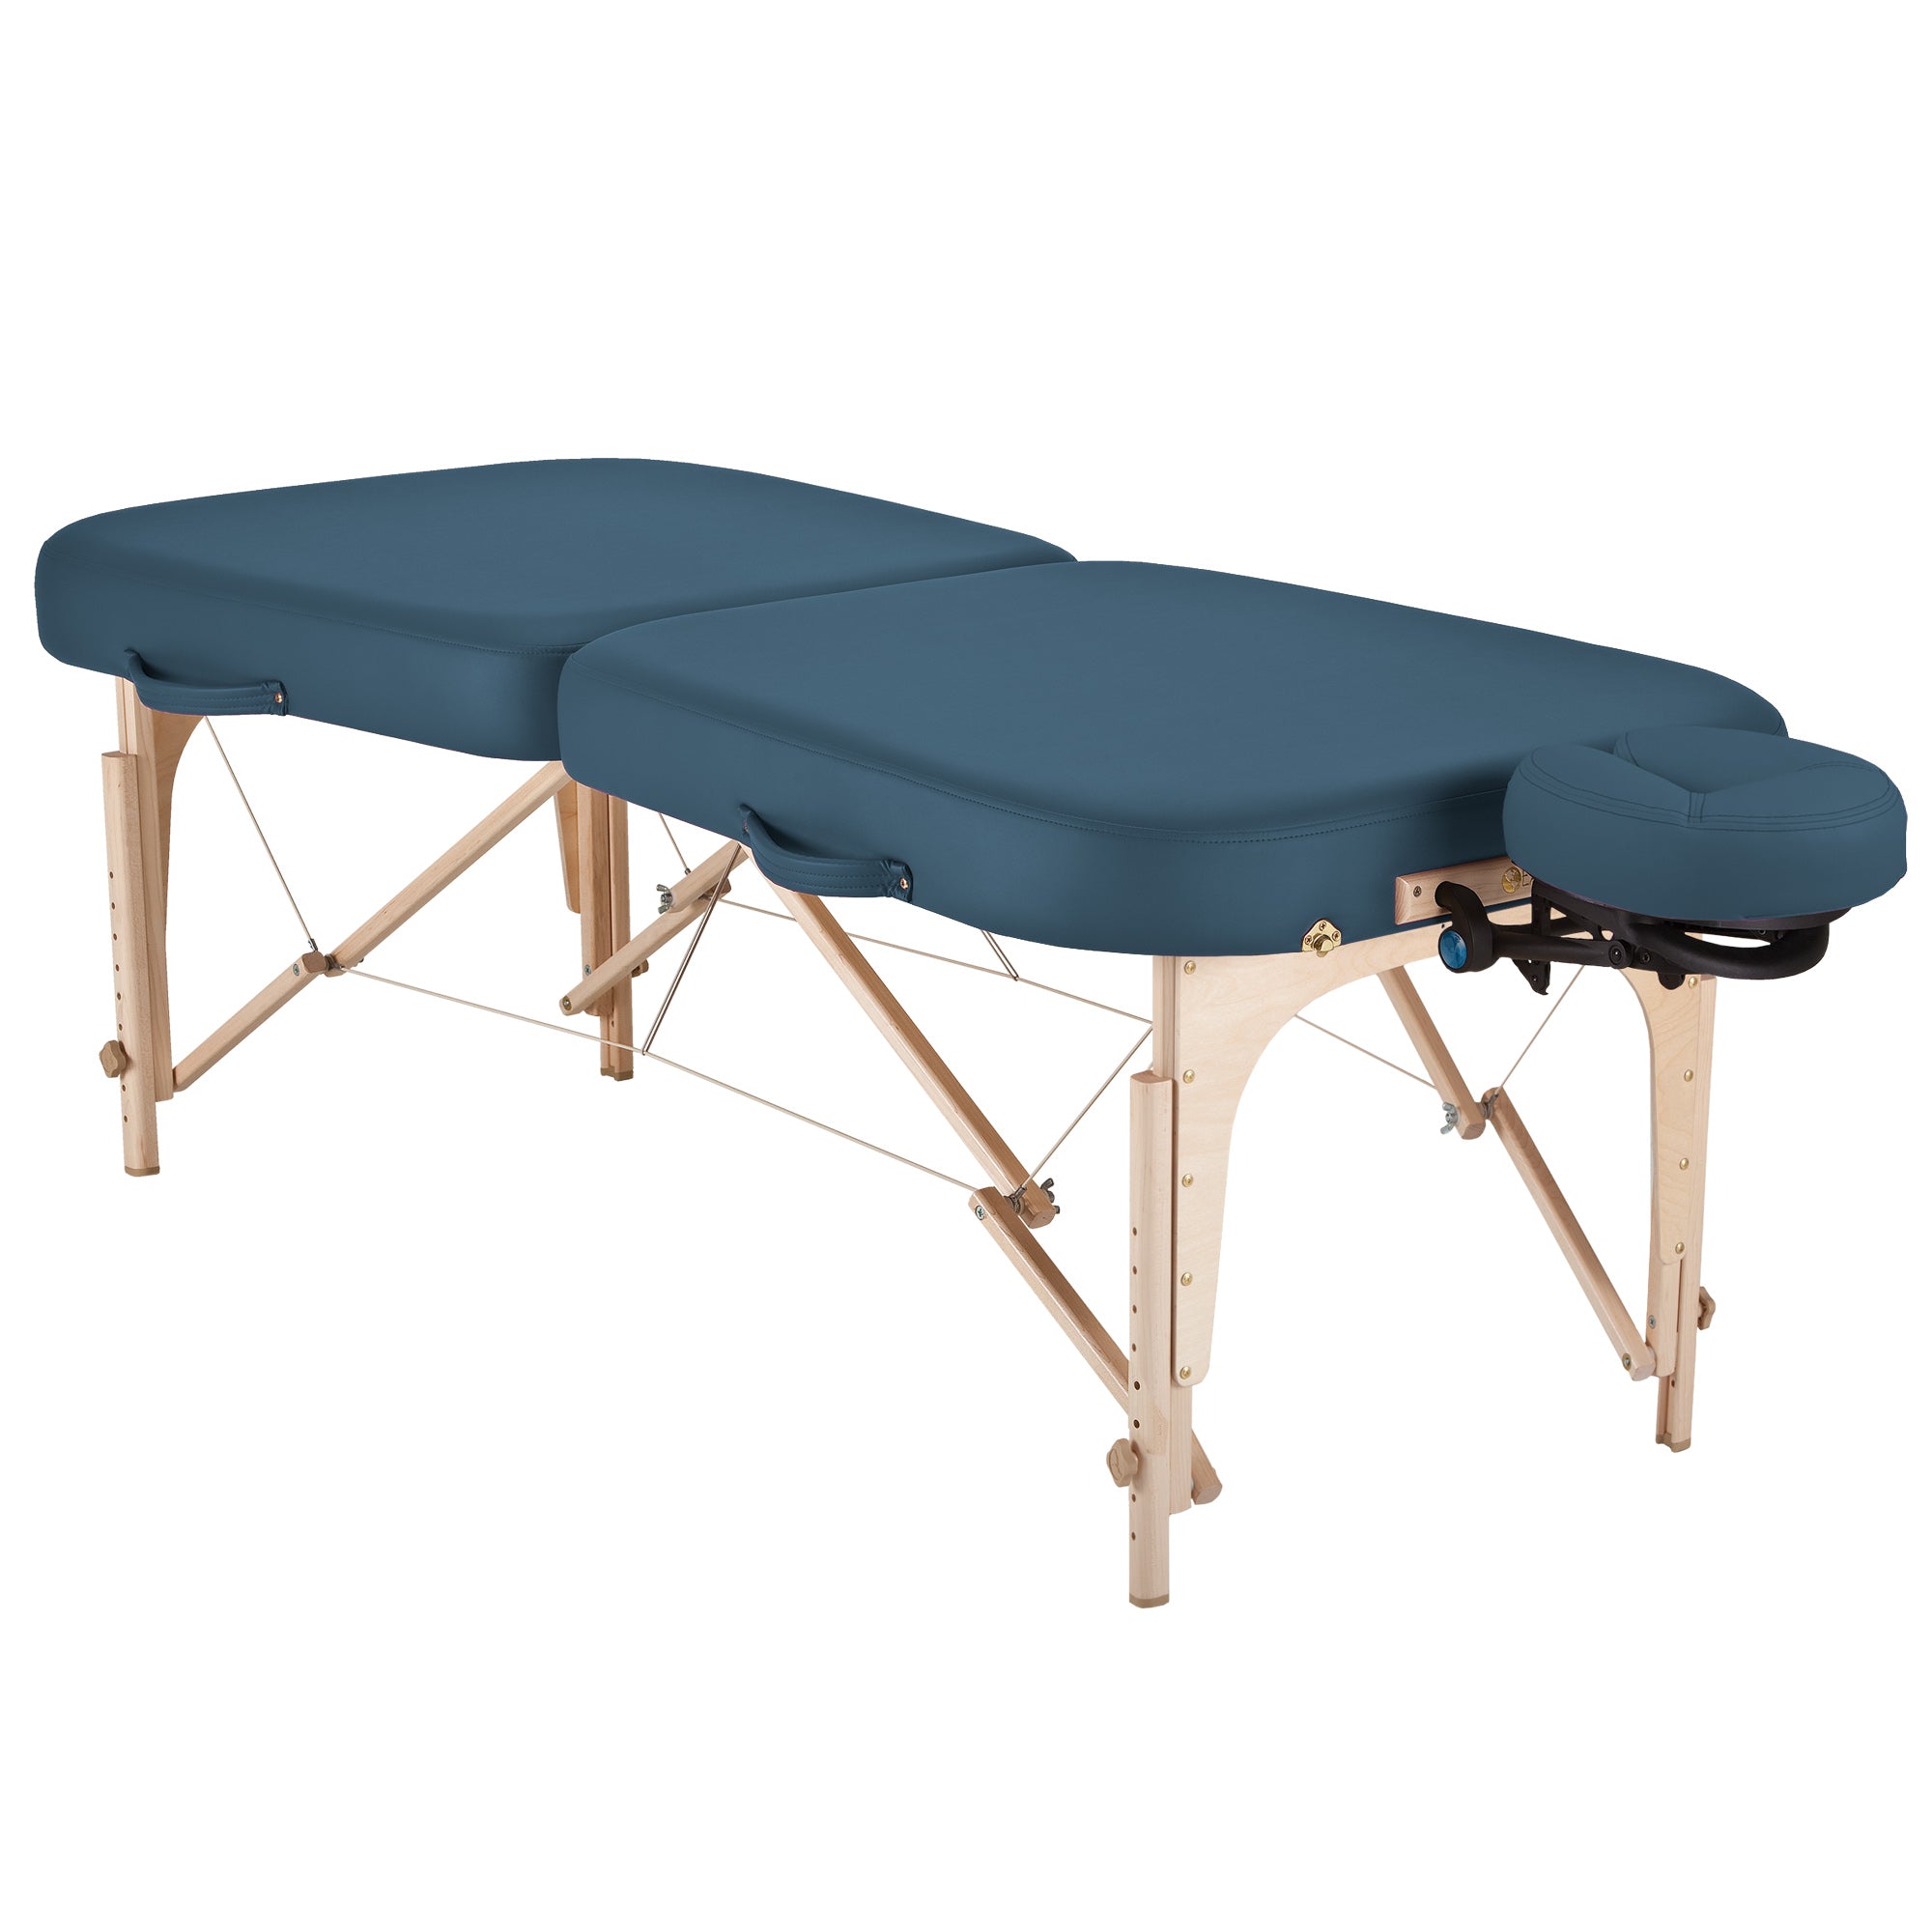 Portable Massage Tables $600+